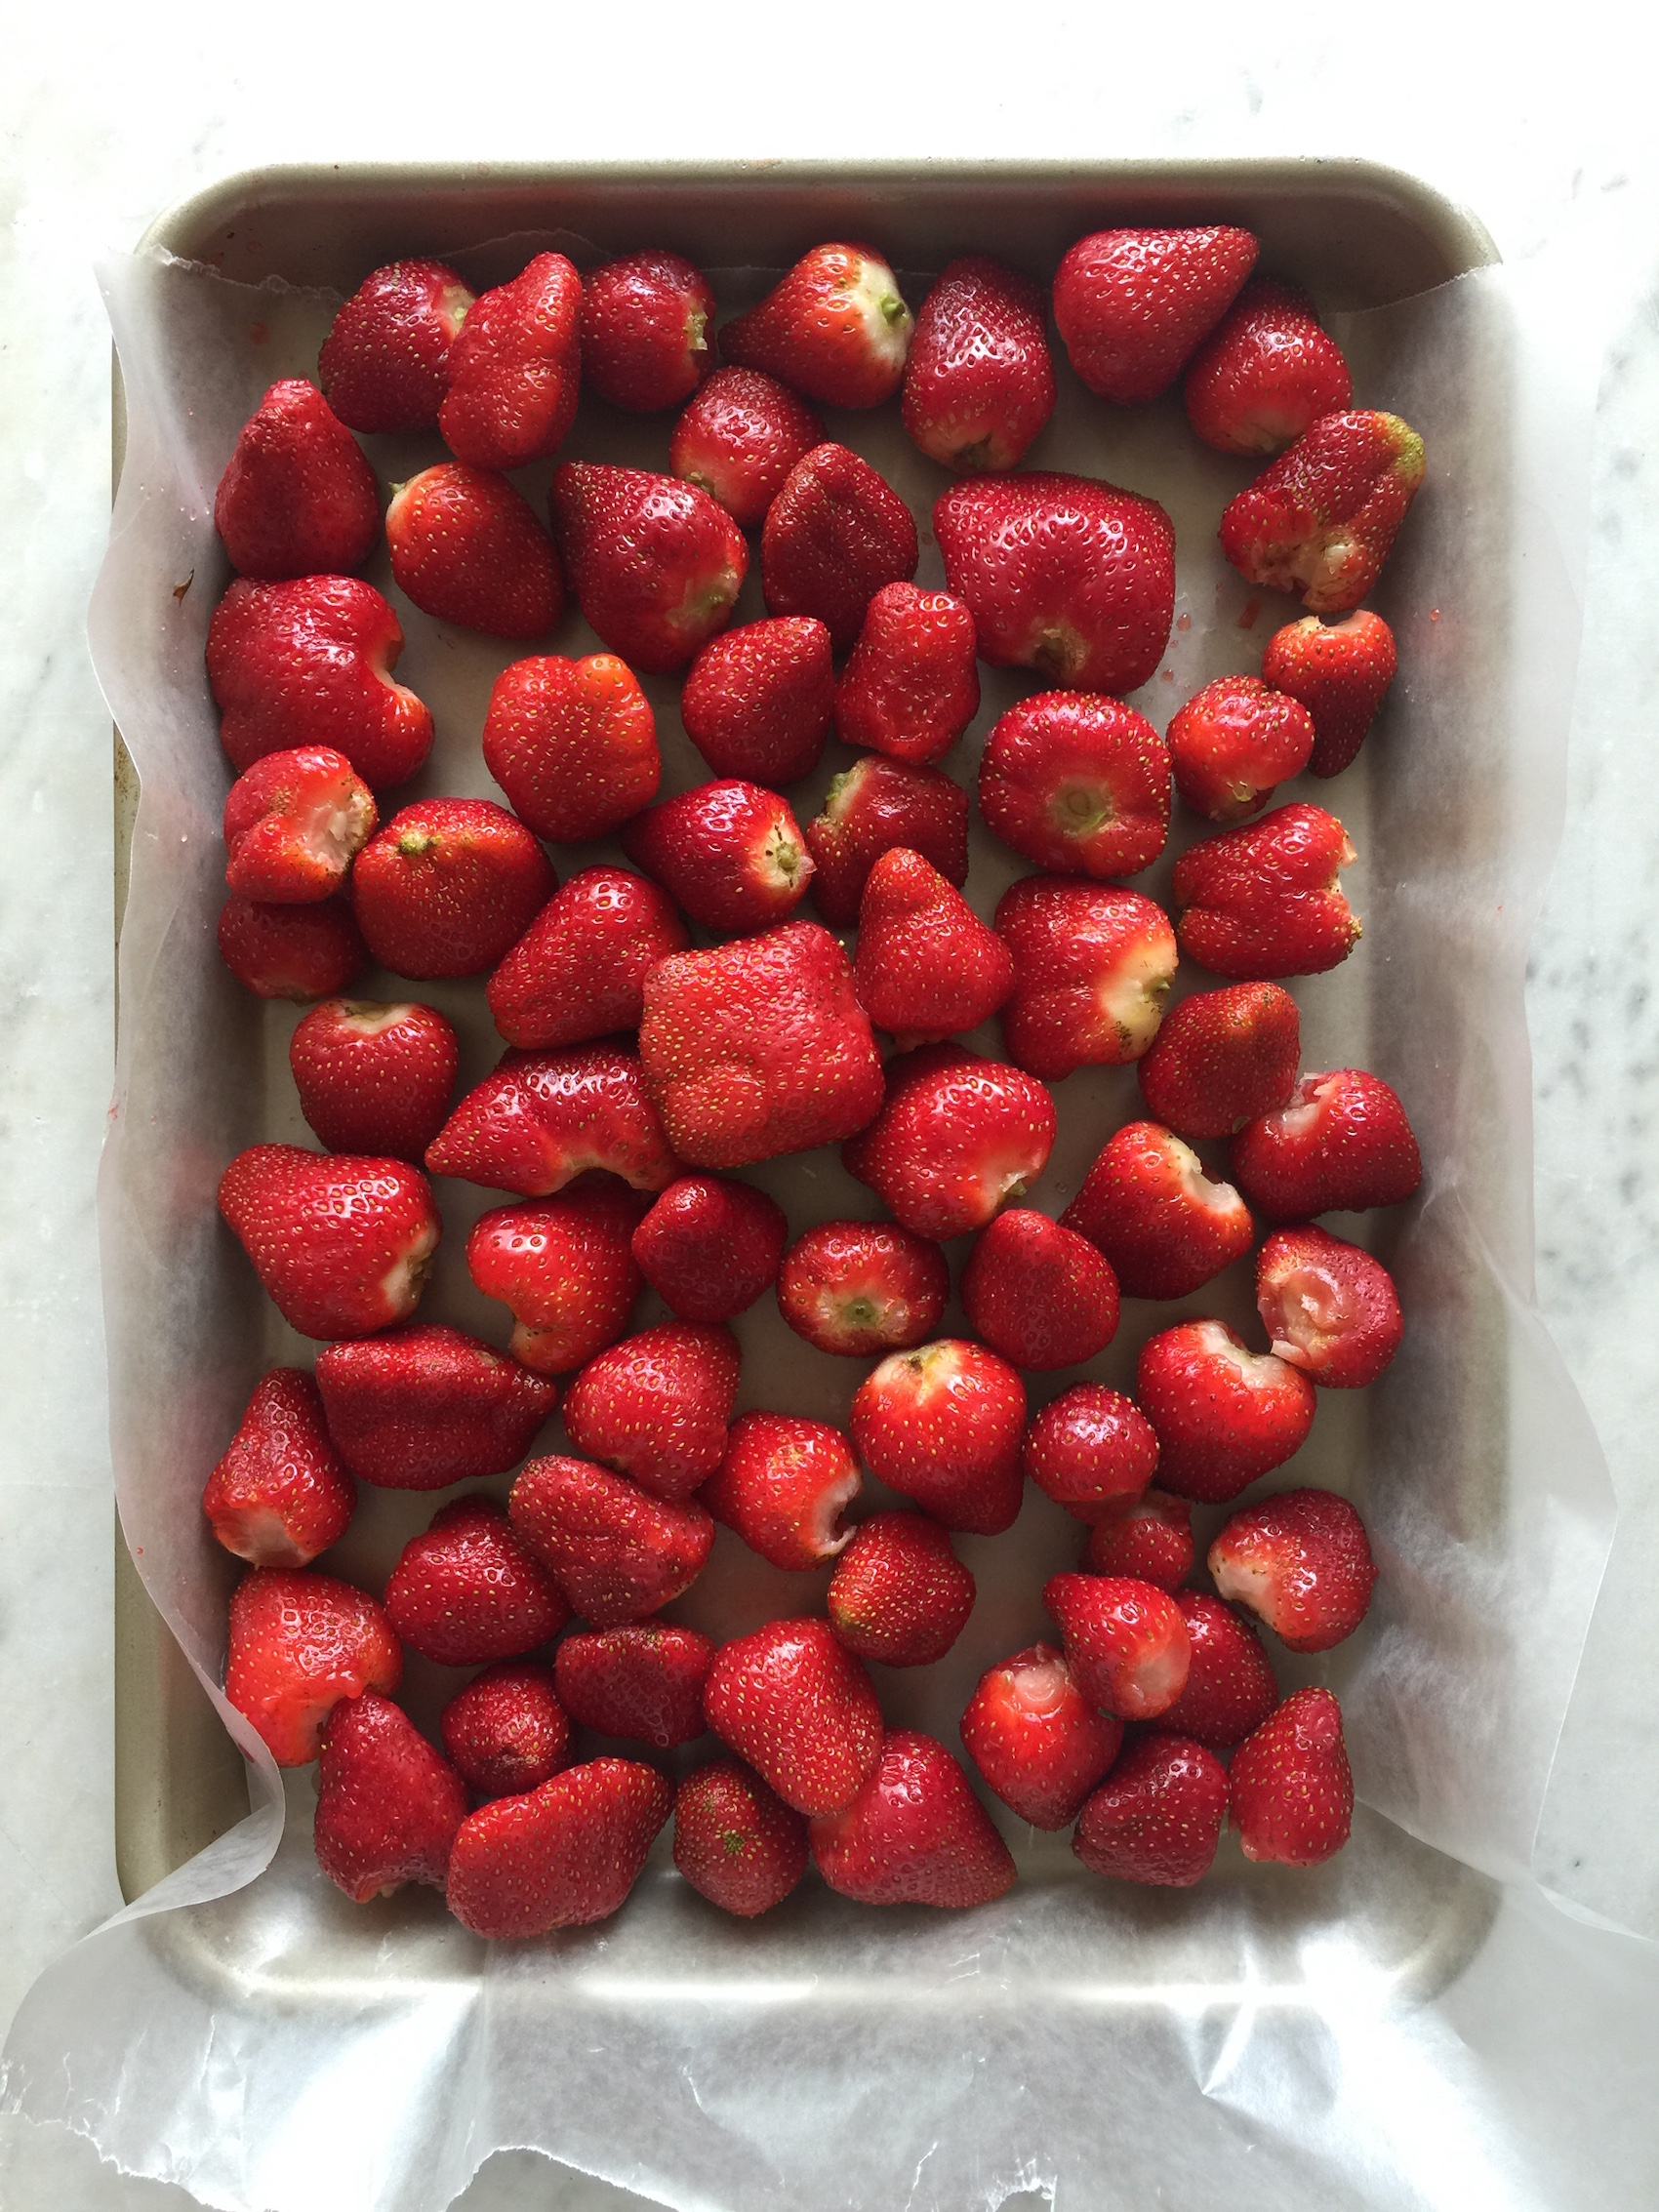 https://www.injennieskitchen.com/wp-content/uploads/2016/05/Strawberry-Rhubarb-Margarita-04-copy.jpg